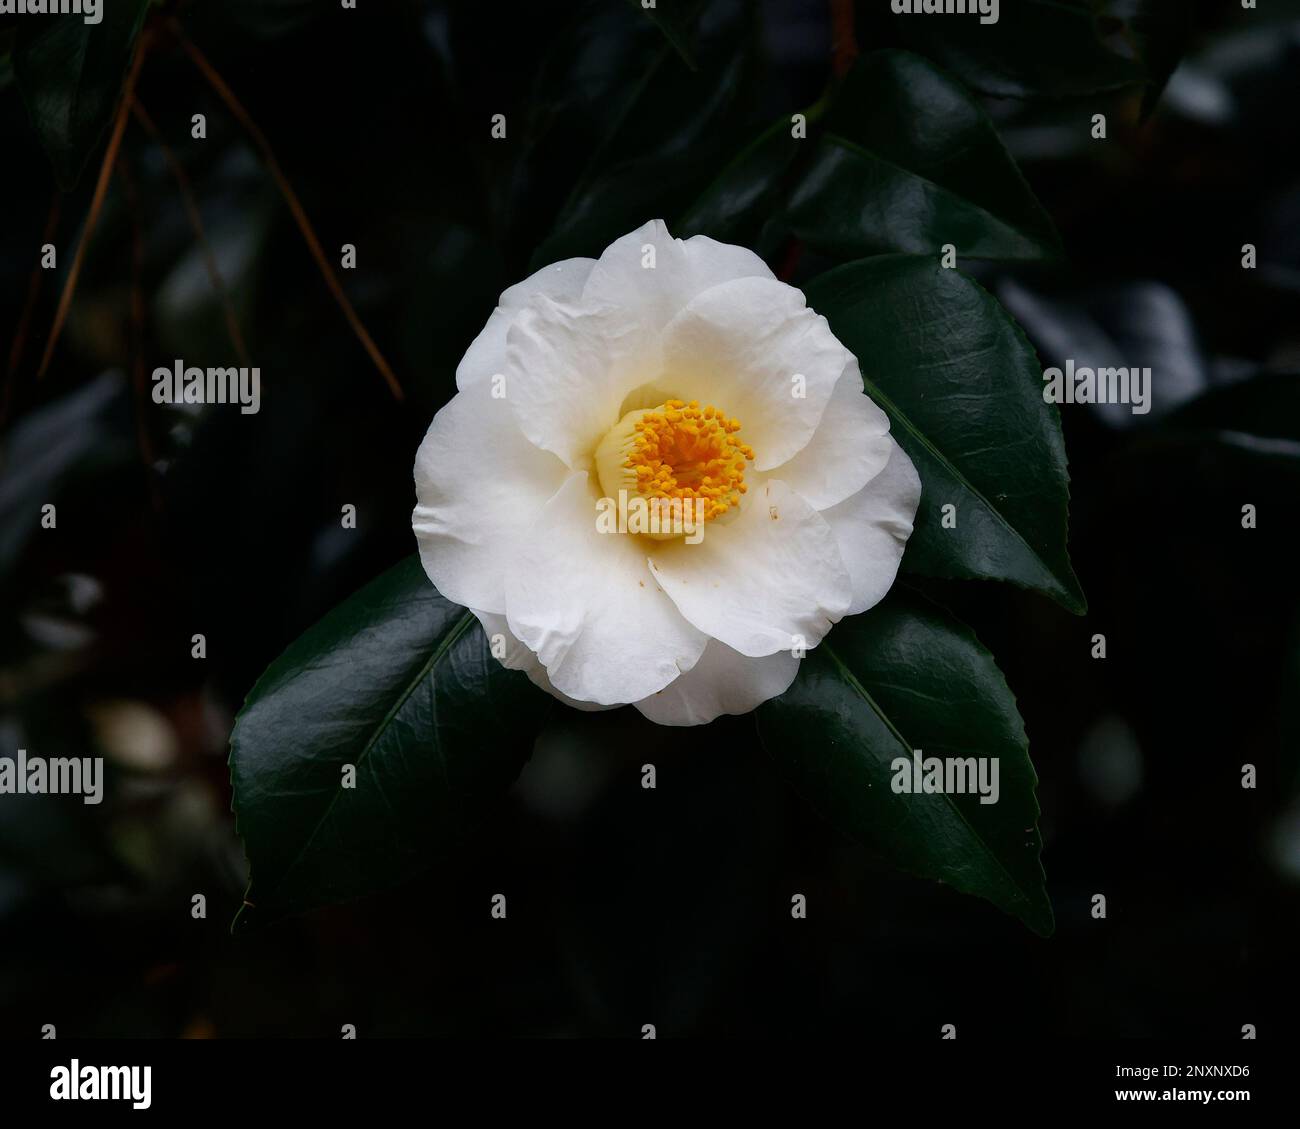 Close up of the white winter flower of the evergreen garden shrub camellia x williamsii Sea Foam. Stock Photo